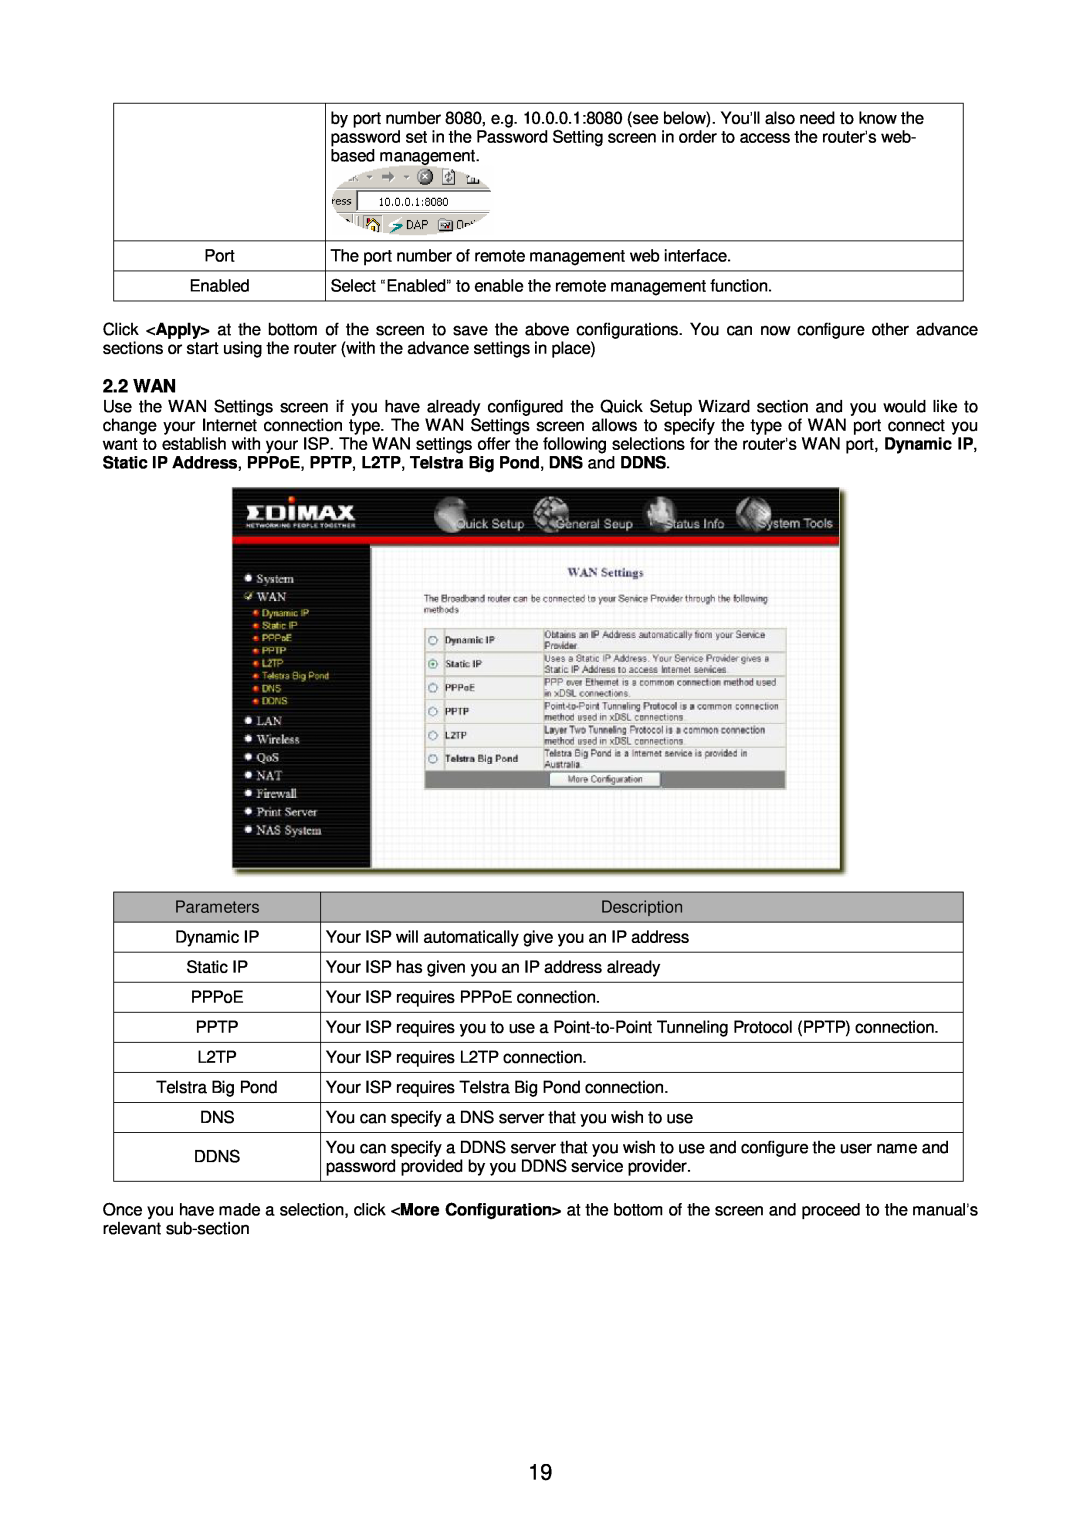 Edimax Technology Broadband Router manual 2.2 WAN 